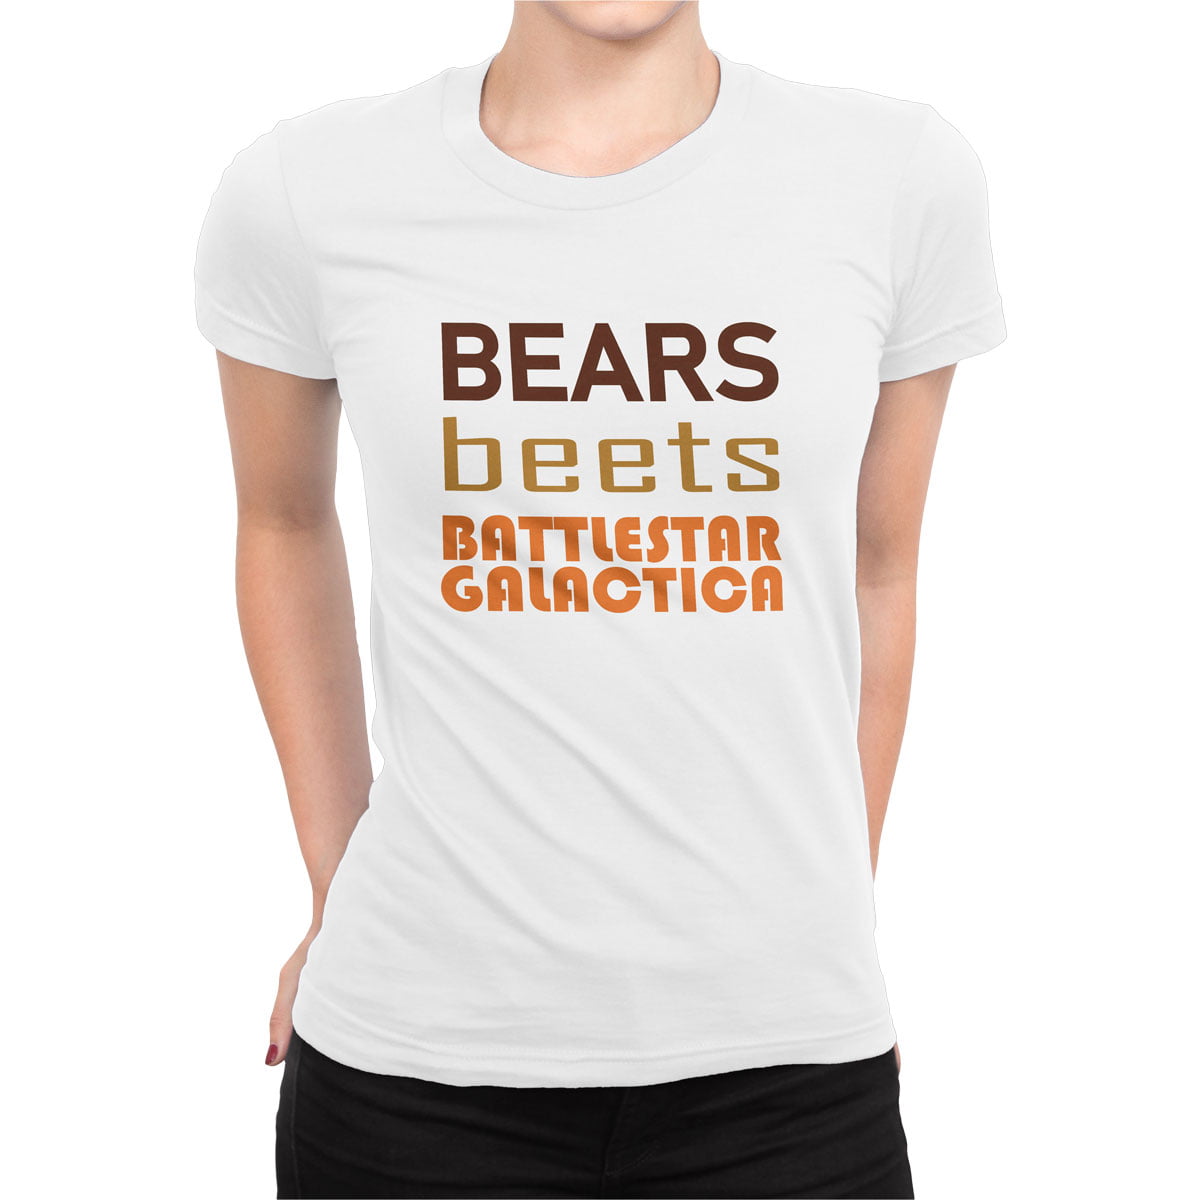 The office bears beets bg kadin tisort b - bears beets battlestar galactica kadın t-shirt - figurex